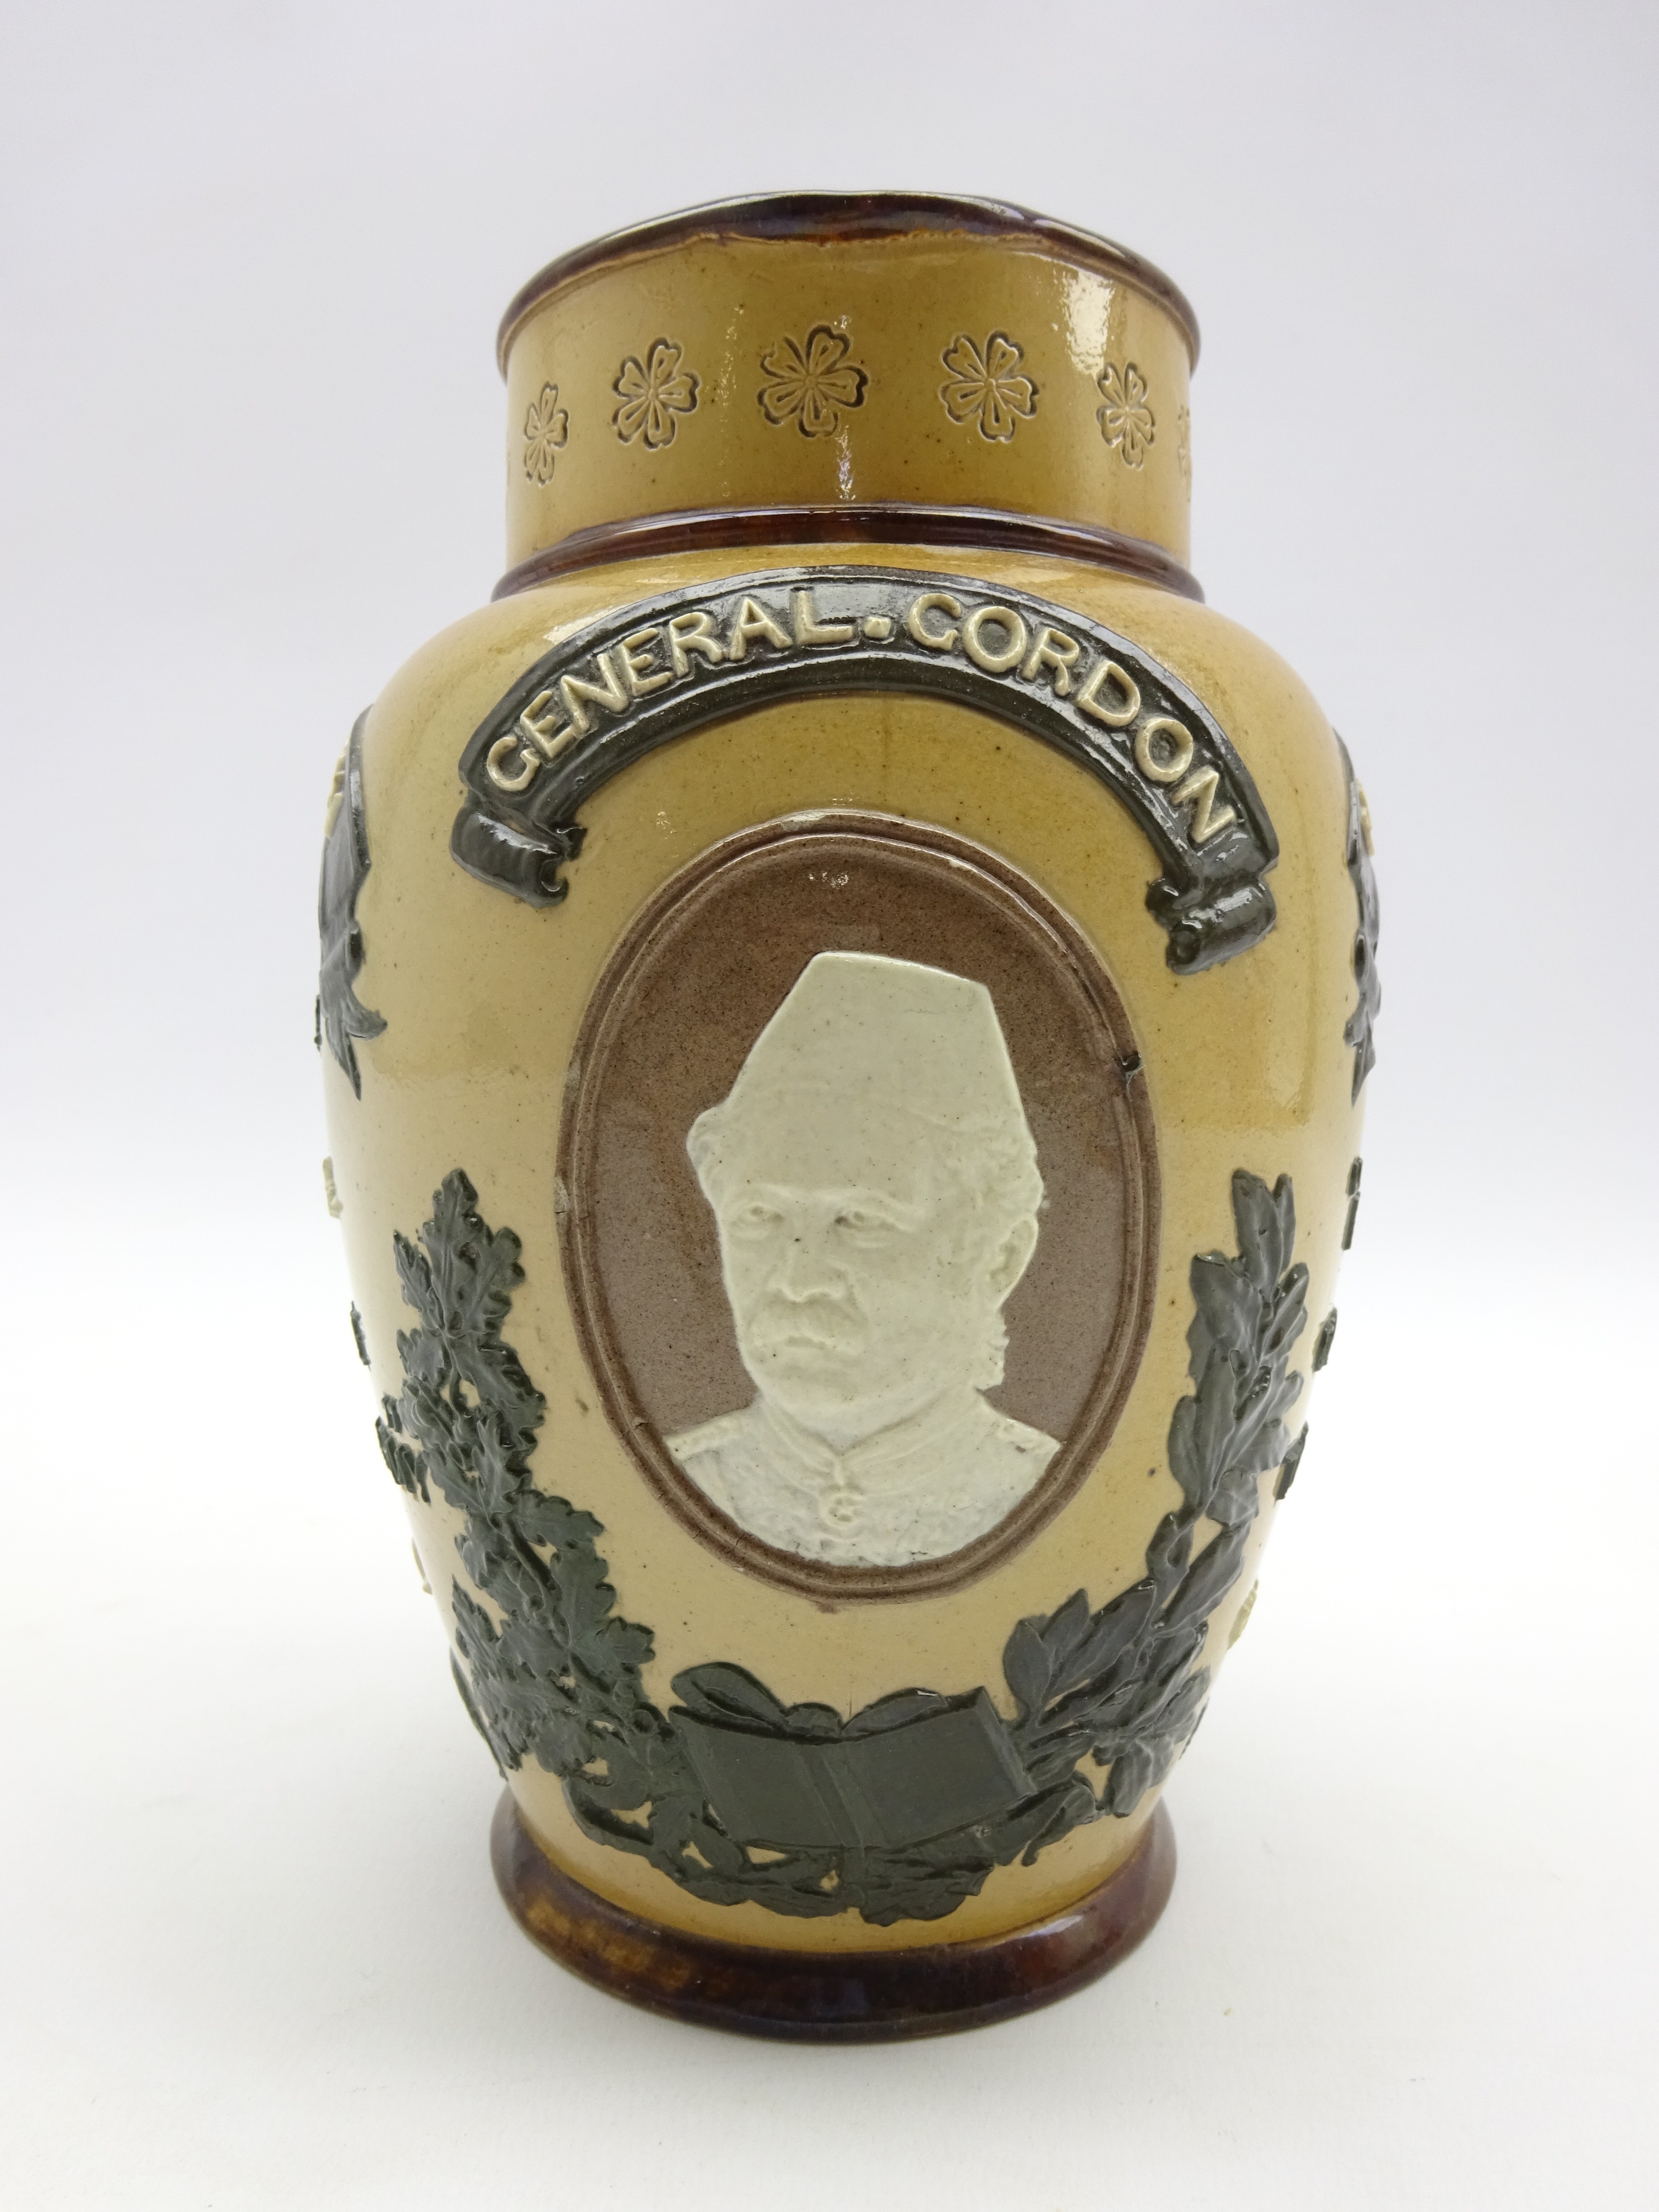 19th century Doulton Lambeth salt-glaze stoneware jug commemorating General Gordon 'Chinese Gordon', - Image 2 of 3